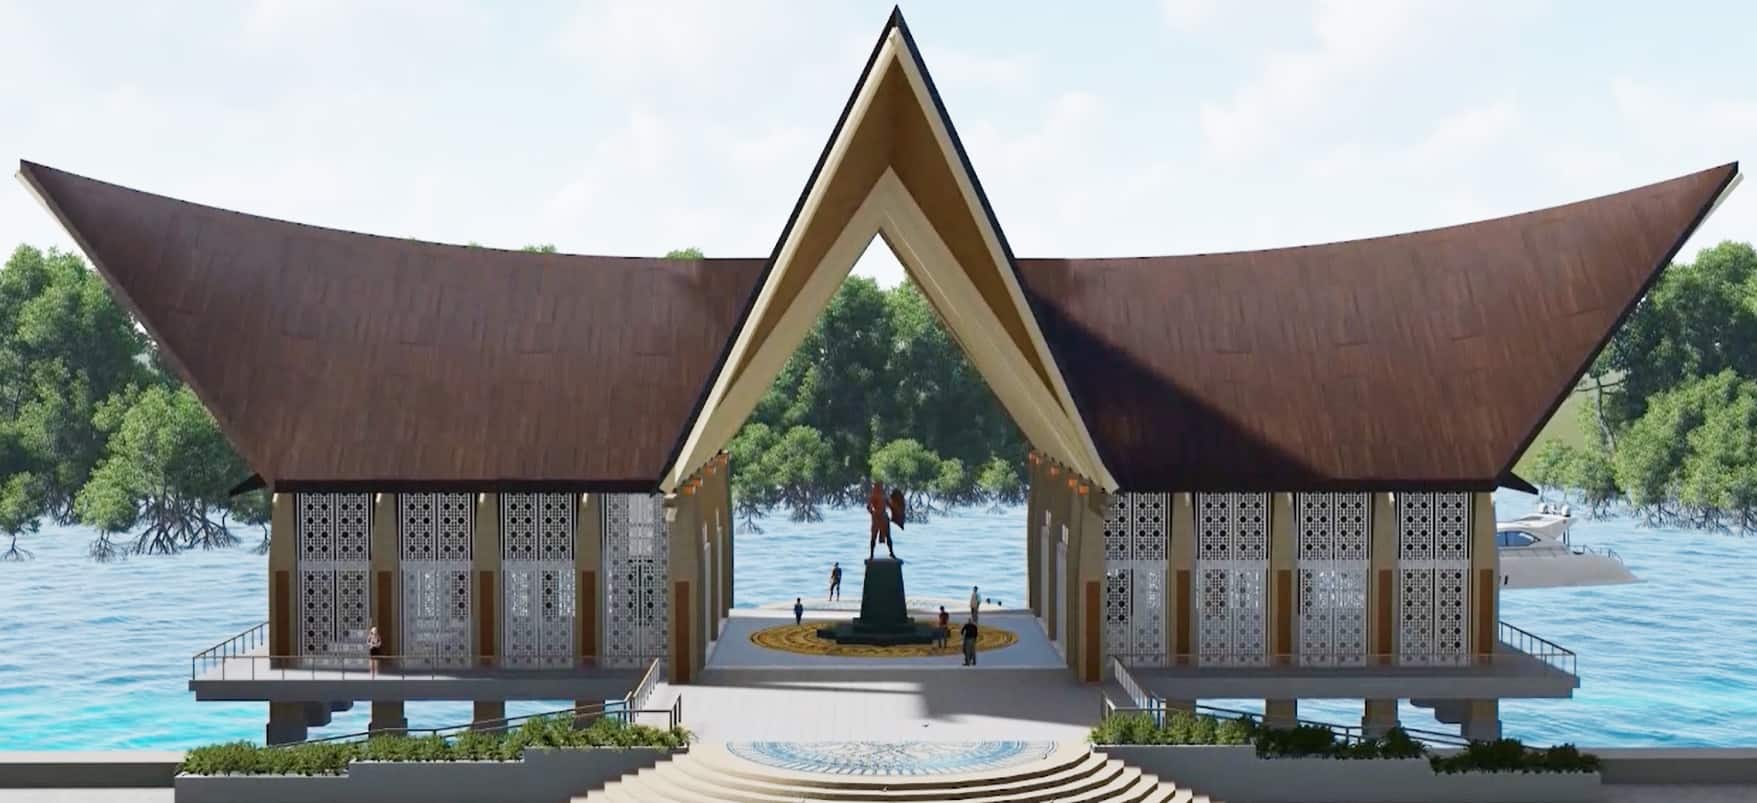 Lapulapu Memorial Shrine and Museum Cebu (1)